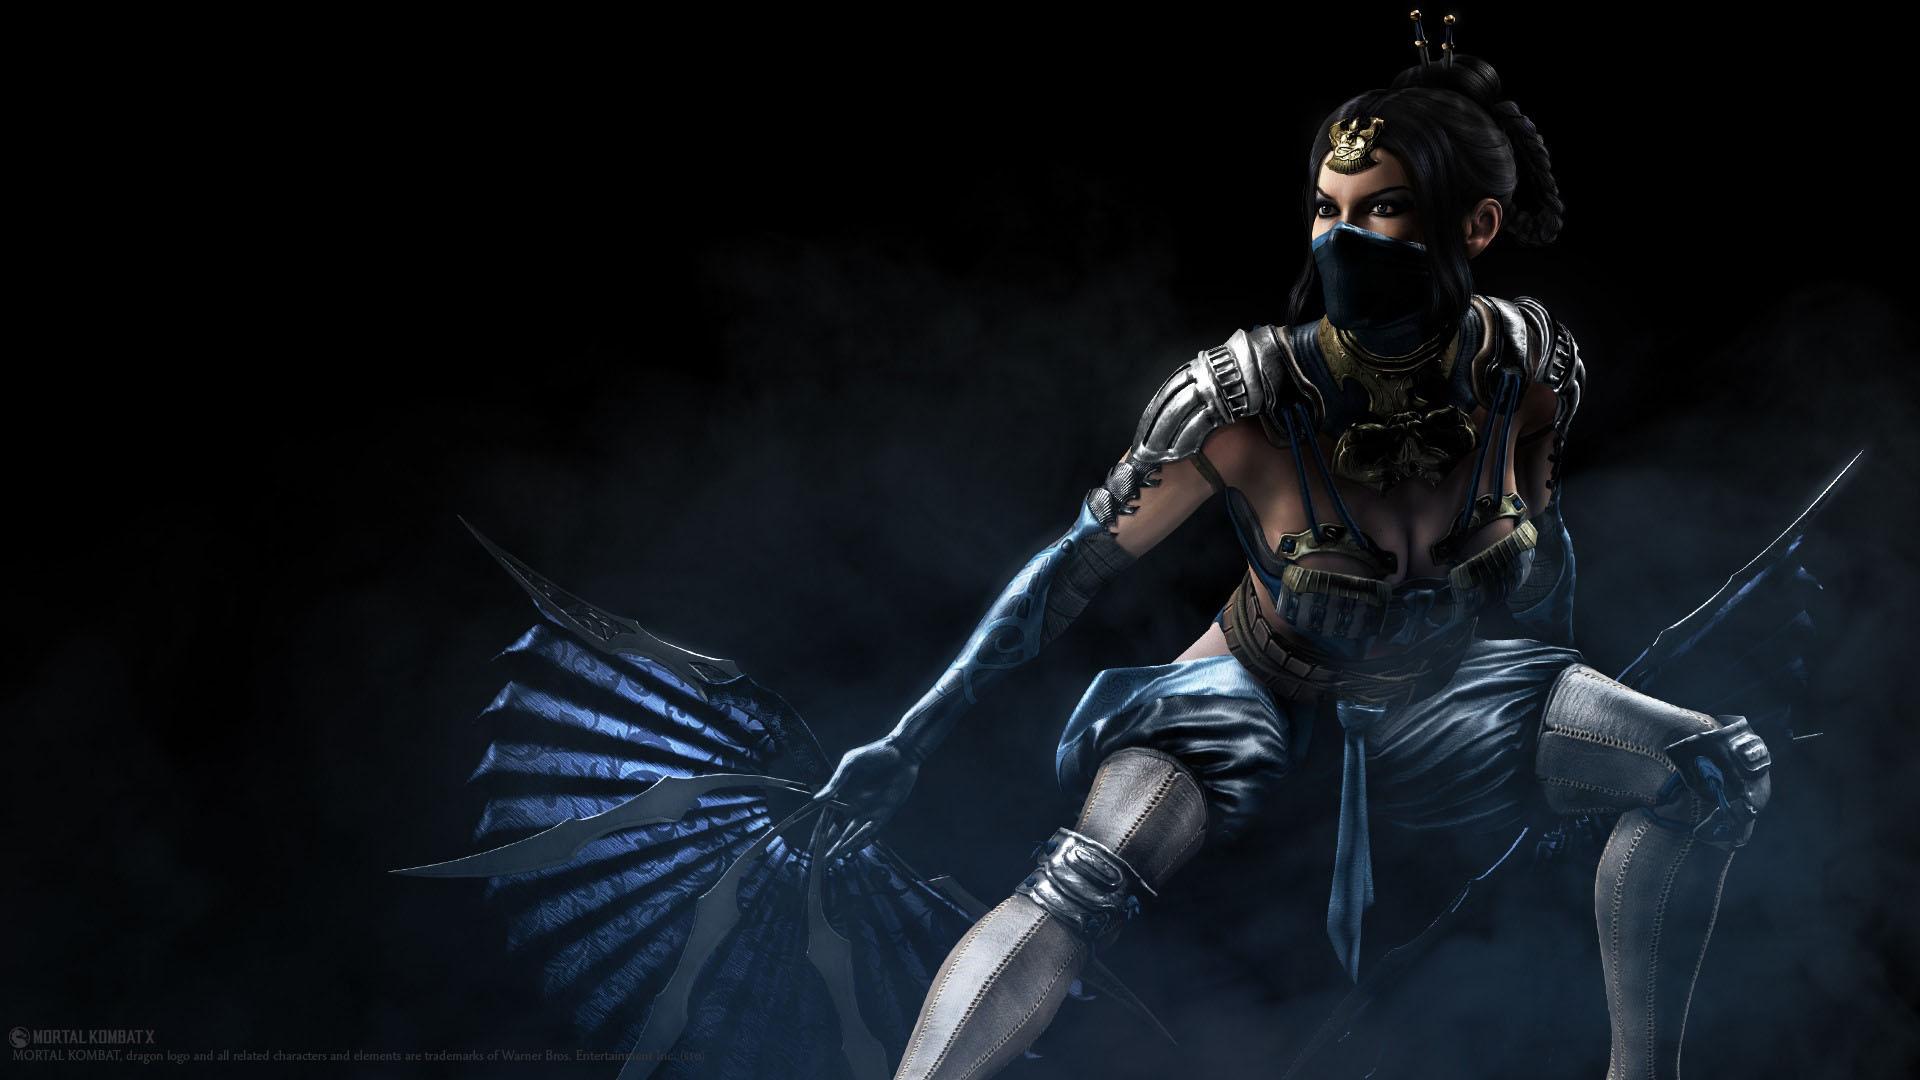 Kitana from the Mortal Kombat Series